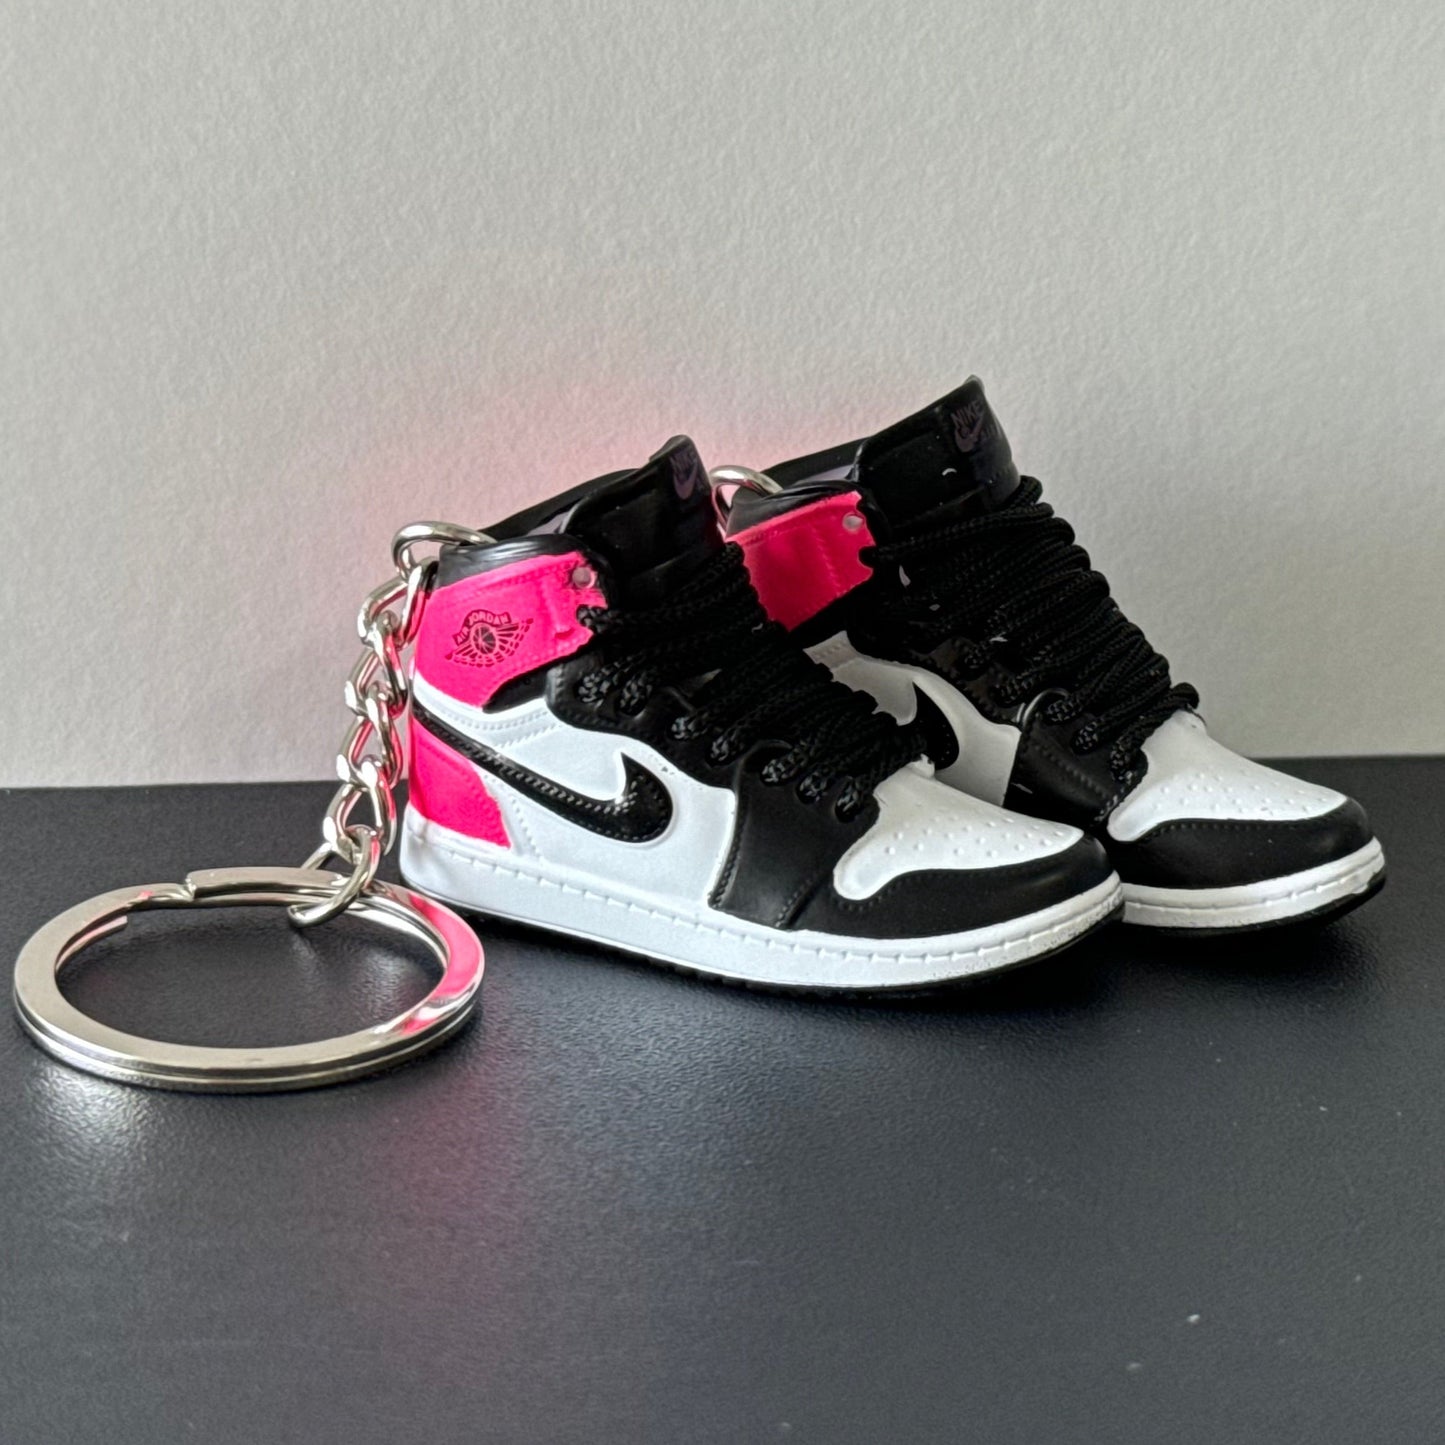 Air Jordan 1 3D Keyring - Retro Pink\Black